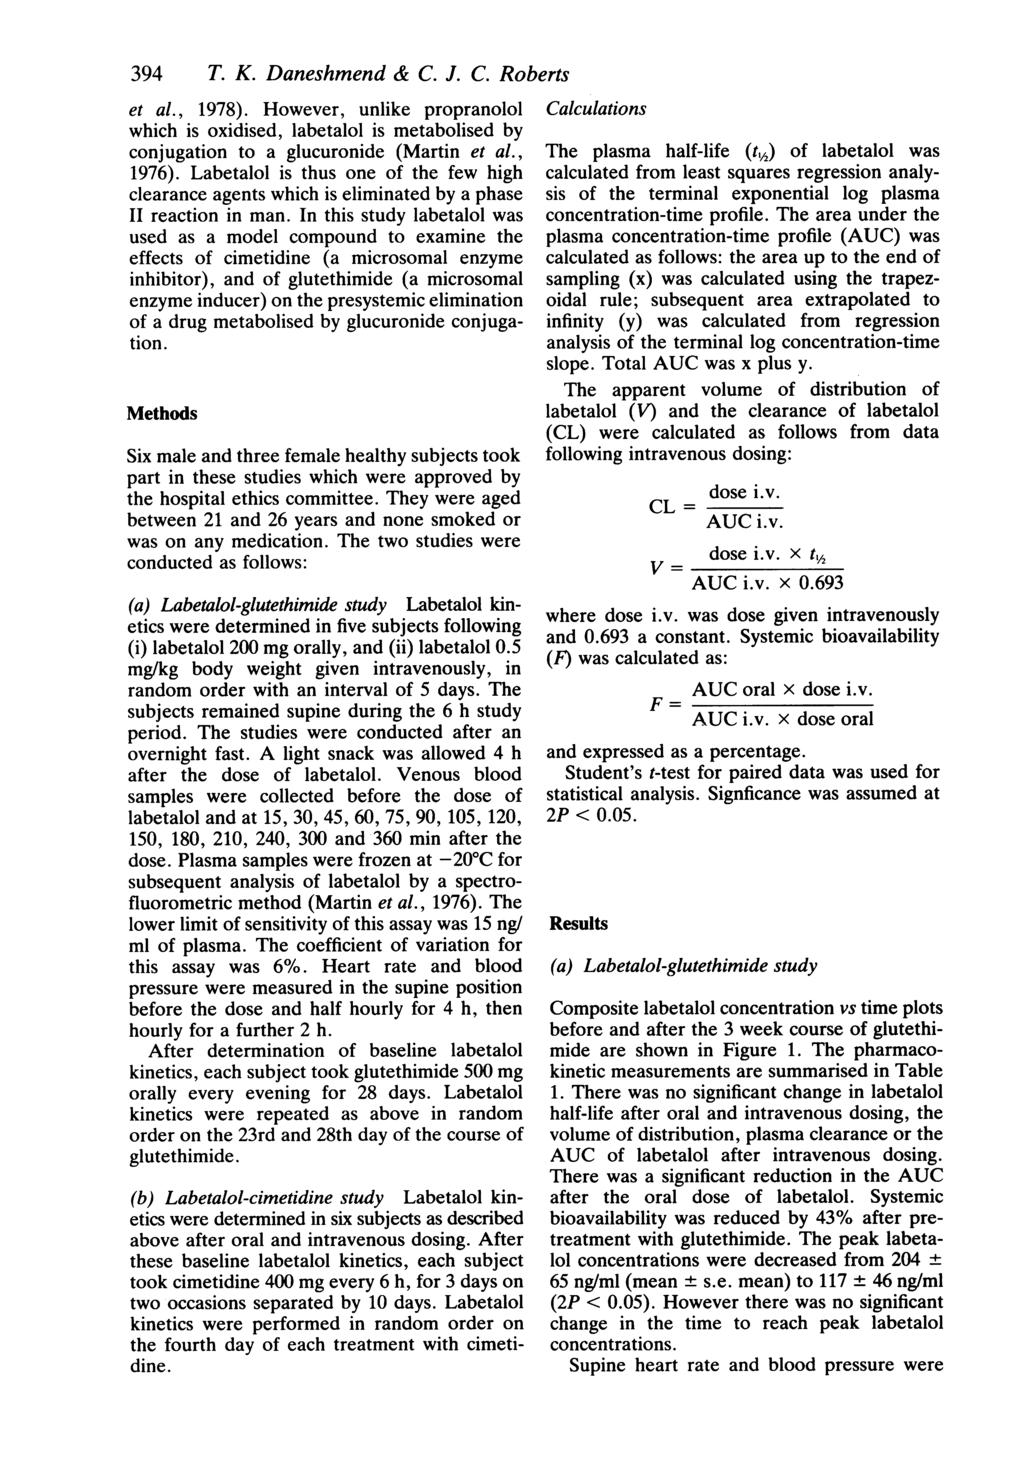 394 T. K. Daneshmend & C. J. C. Roberts et al., 1978). However, unlike propranolol which is oxidised, labetalol is metabolised by conjugation to a glucuronide (Martin et al., 1976).